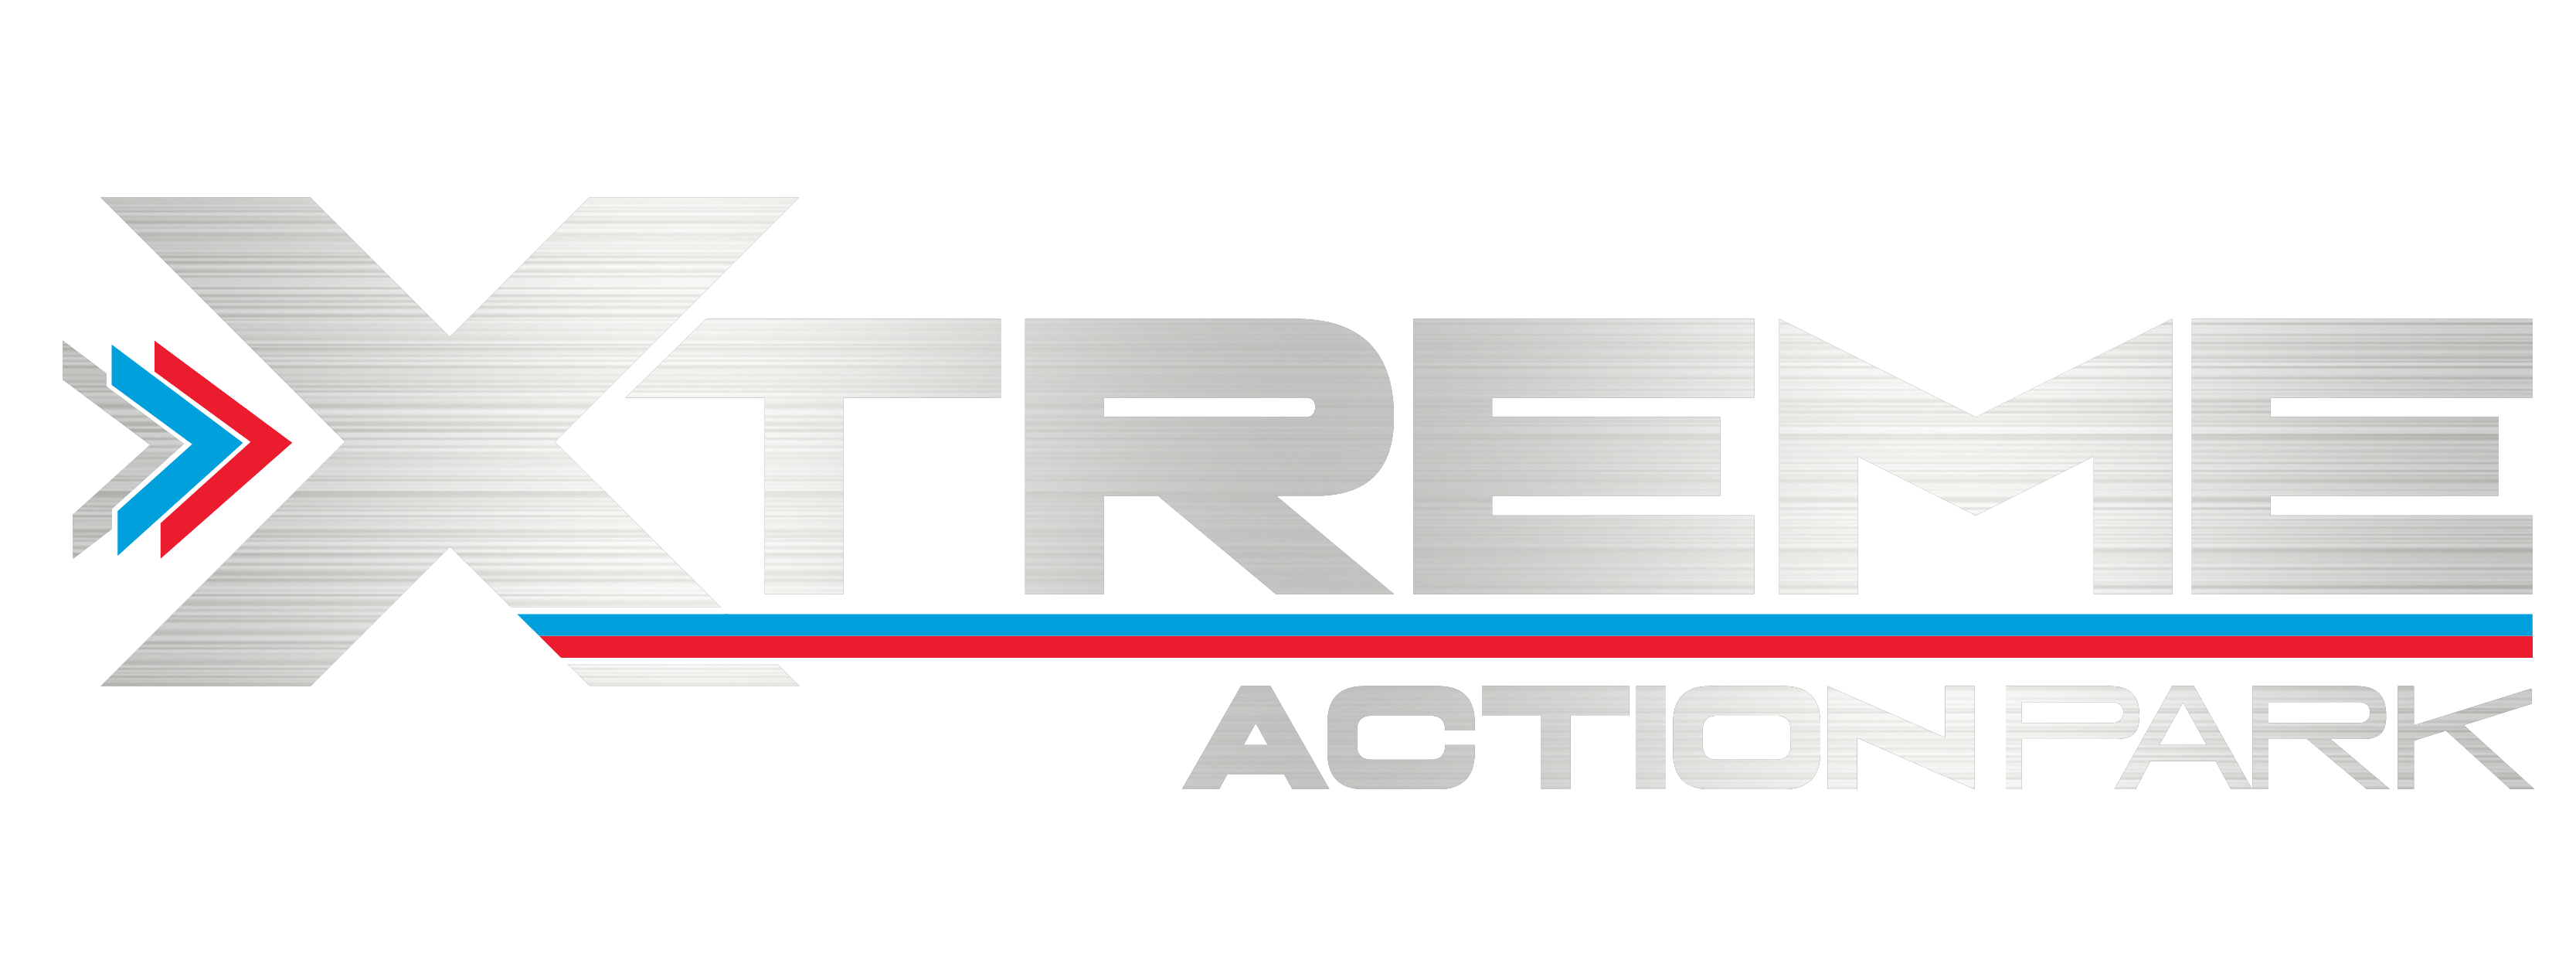 Xtreme Action Park - Logo